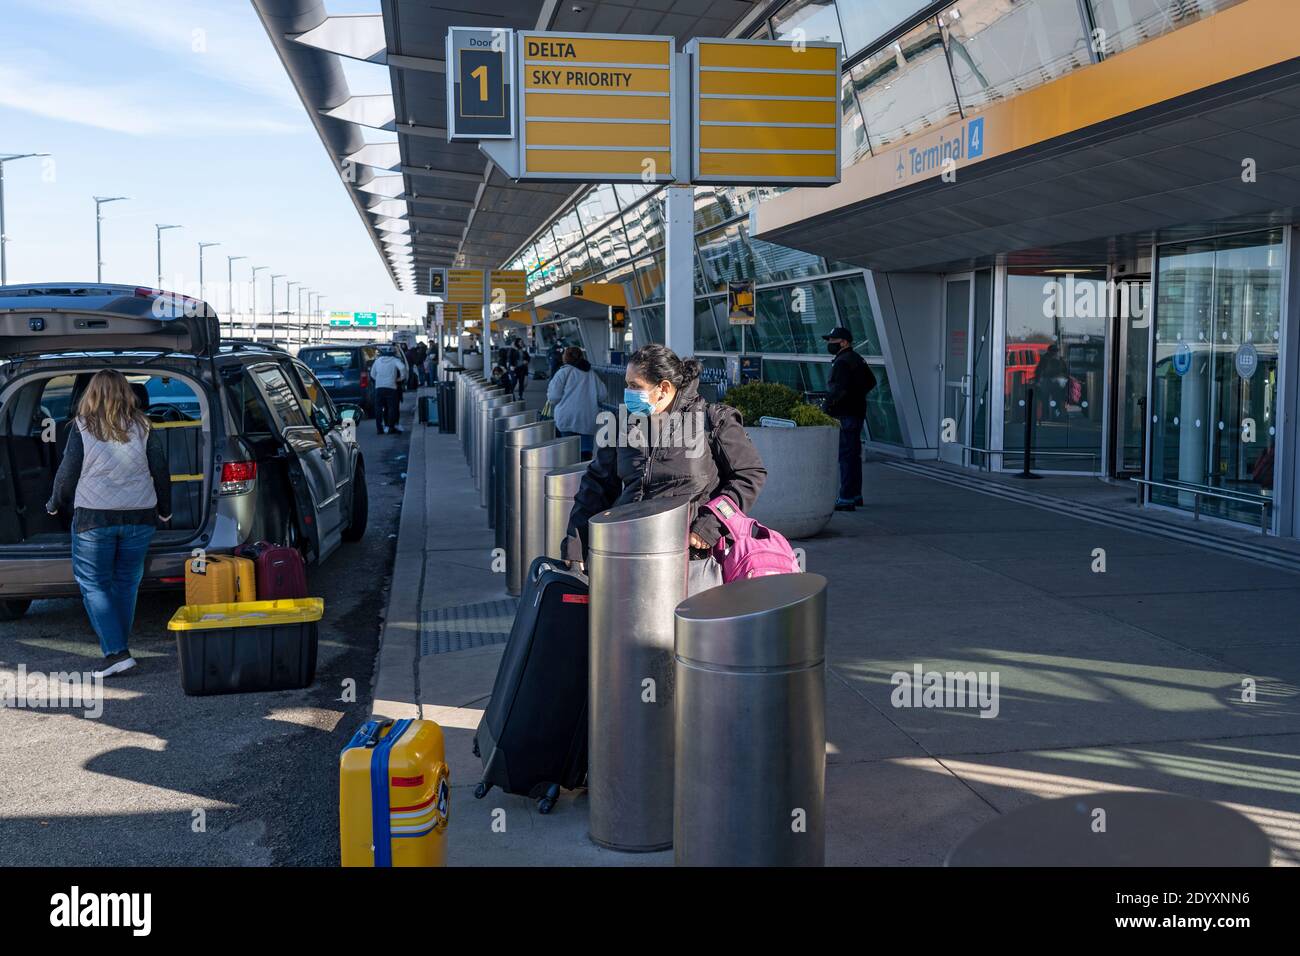 NEW YORK, NY – DECEMBER 27: Passengers arrive at terminal 4 at John F. Kennedy International Airport (JFK) on December 27, 2020 in New York City. Stock Photo